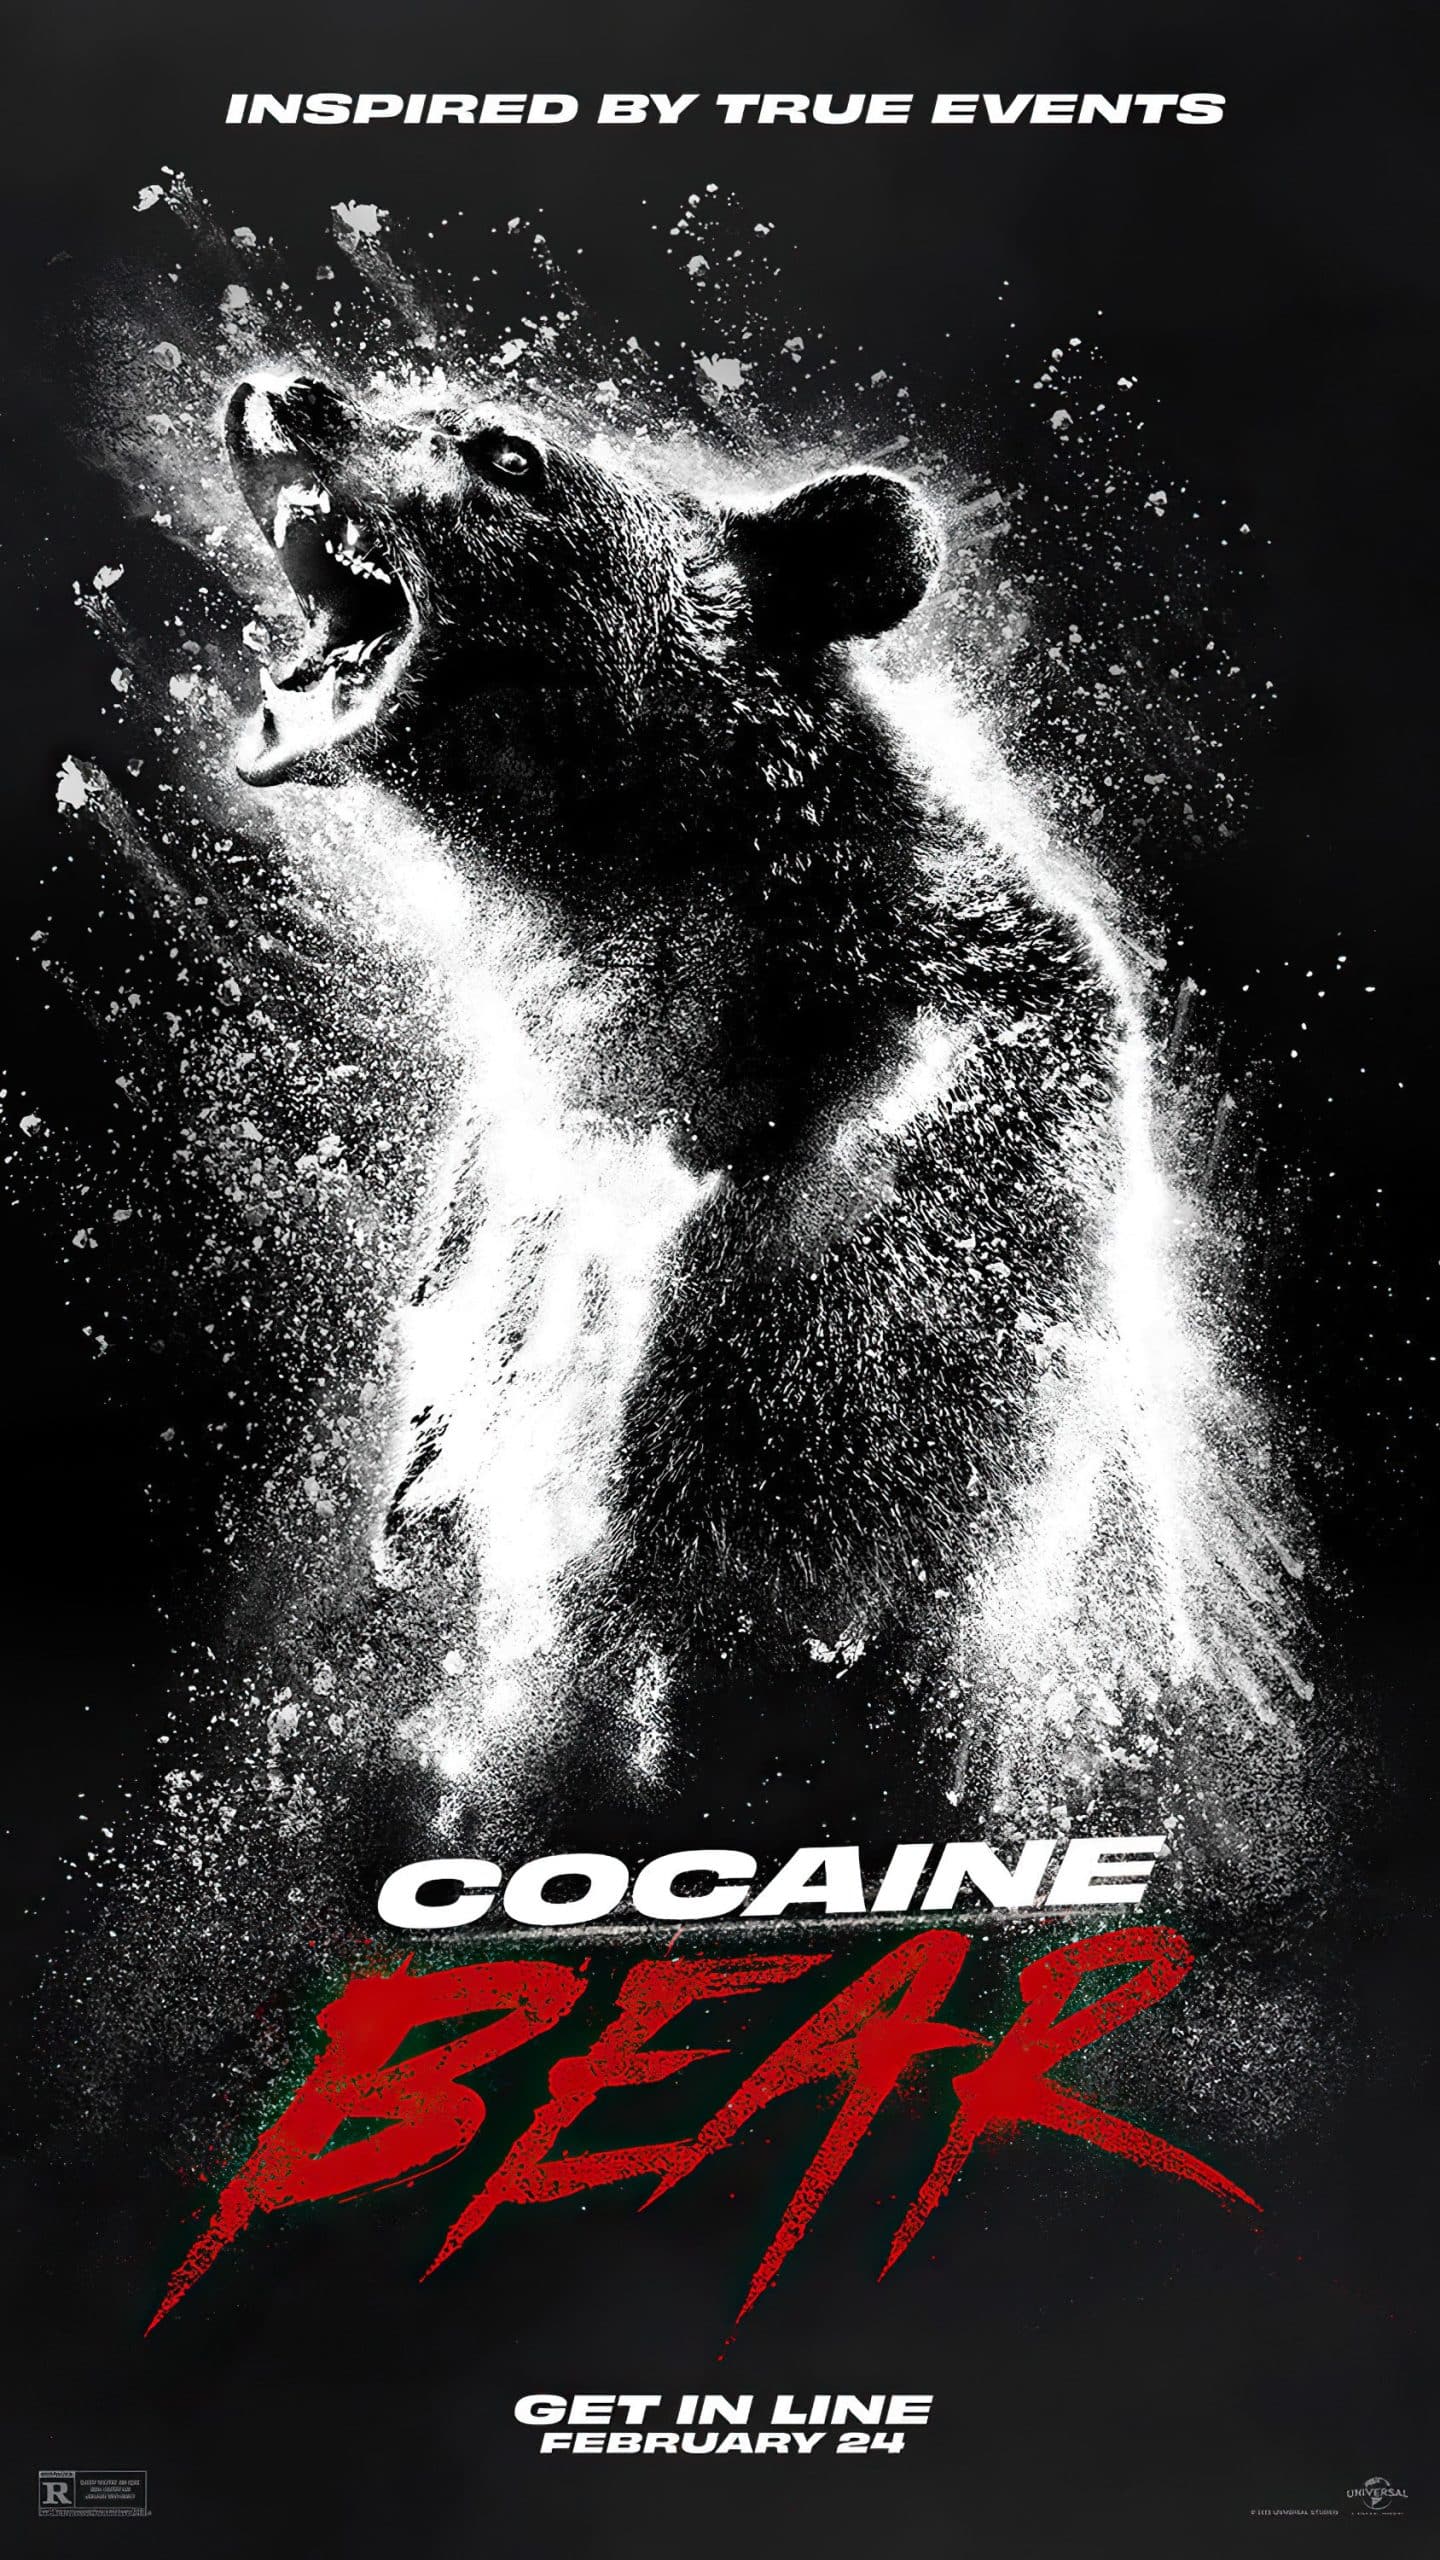 COCAINE BEAR, US advance poster, 2022